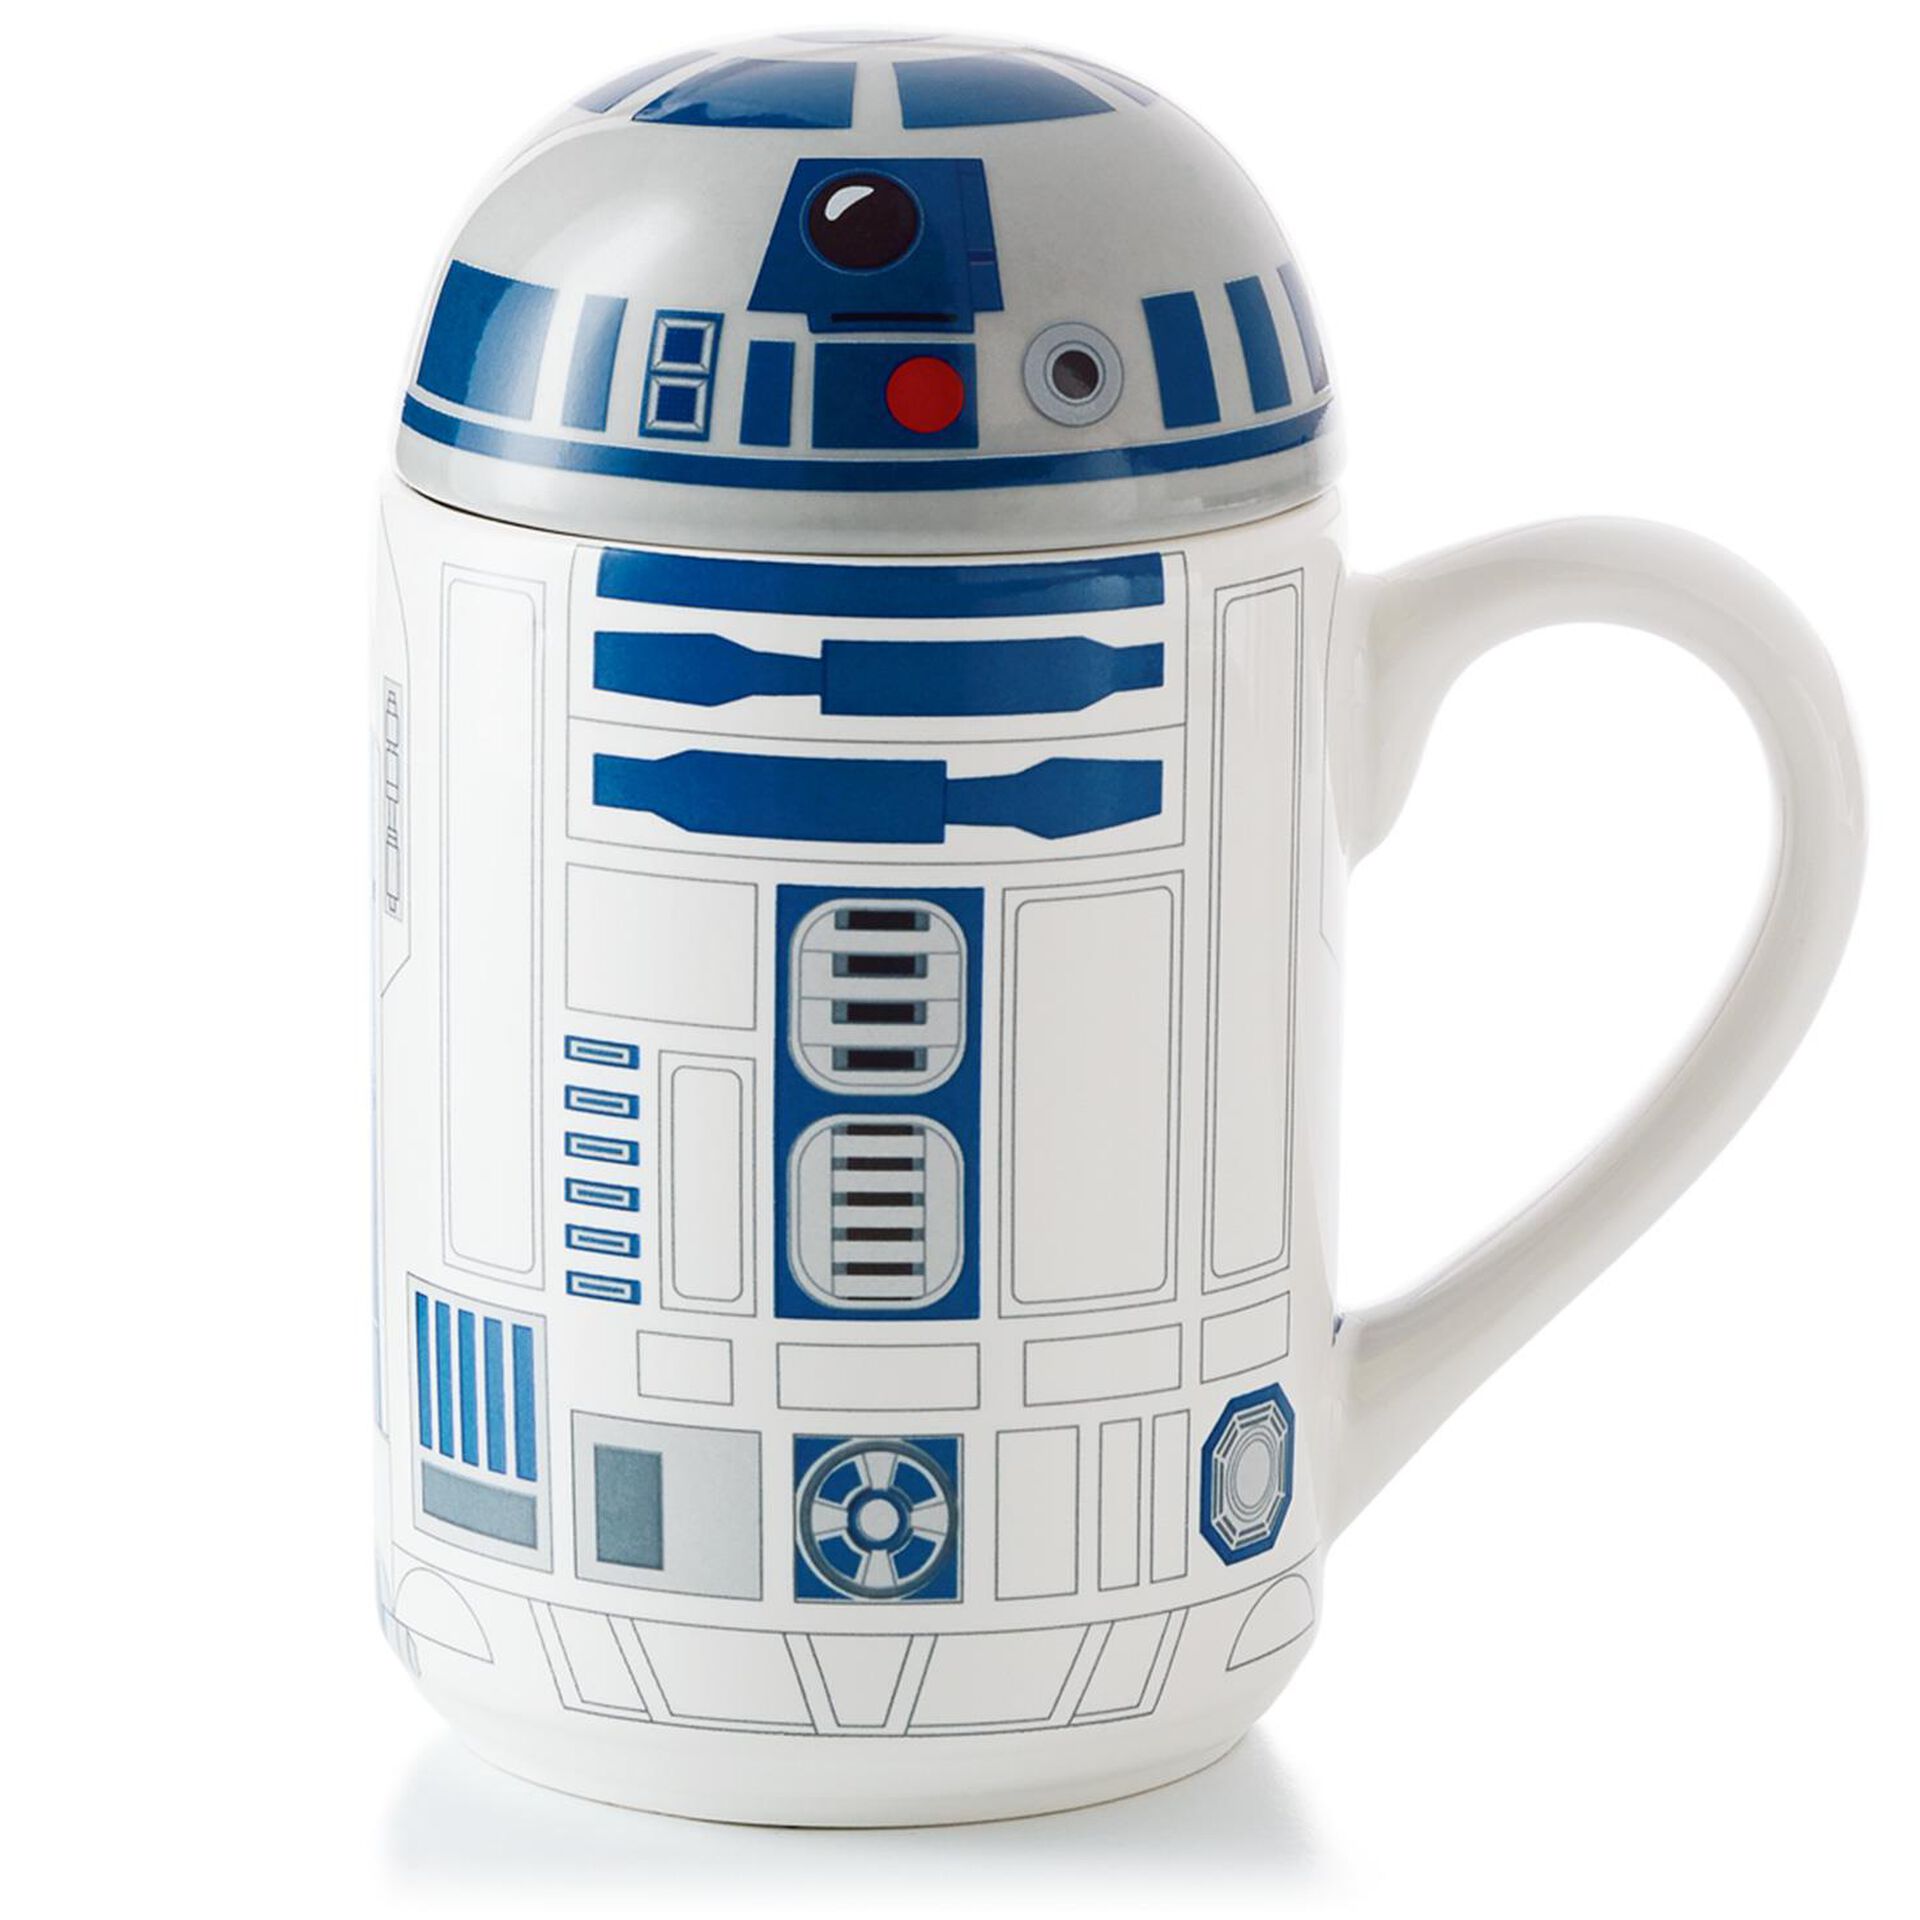 Wars™ R2-D2™ Mug With Sound - Mugs & Teacups - Hallmark